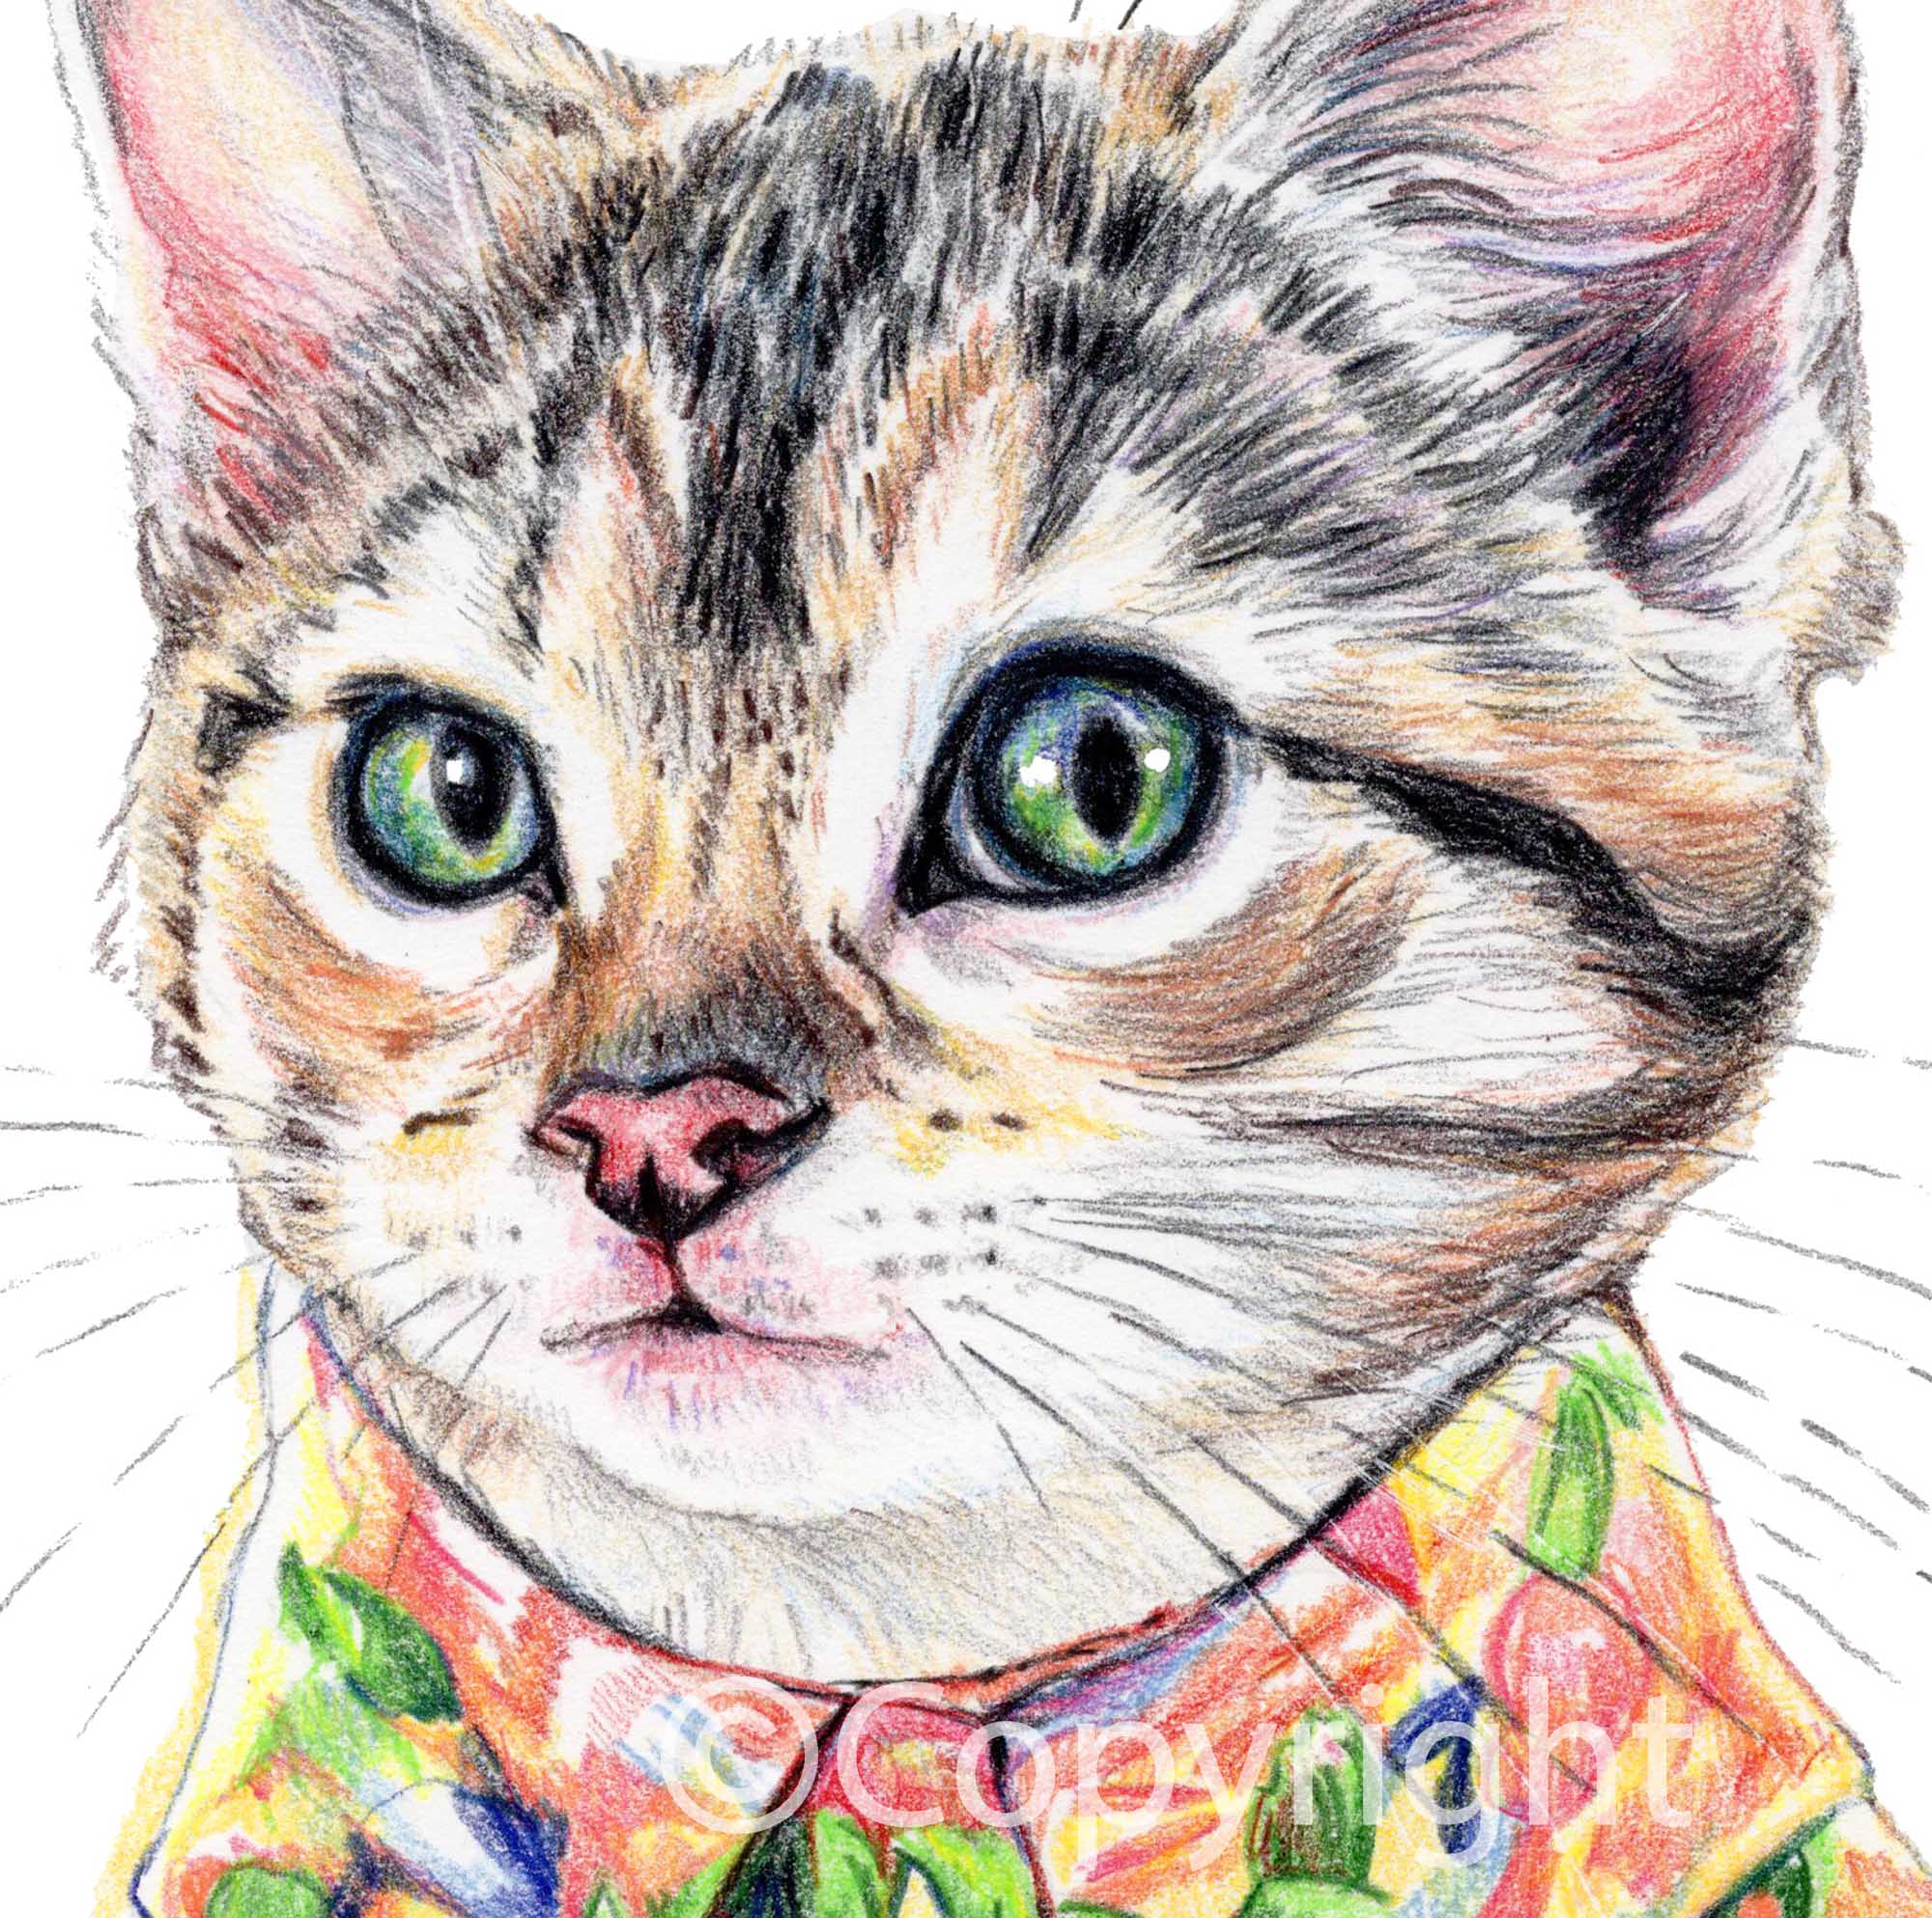 Hand drawn cat portraits. - Cat portrait artist. - Custom cat portraits.